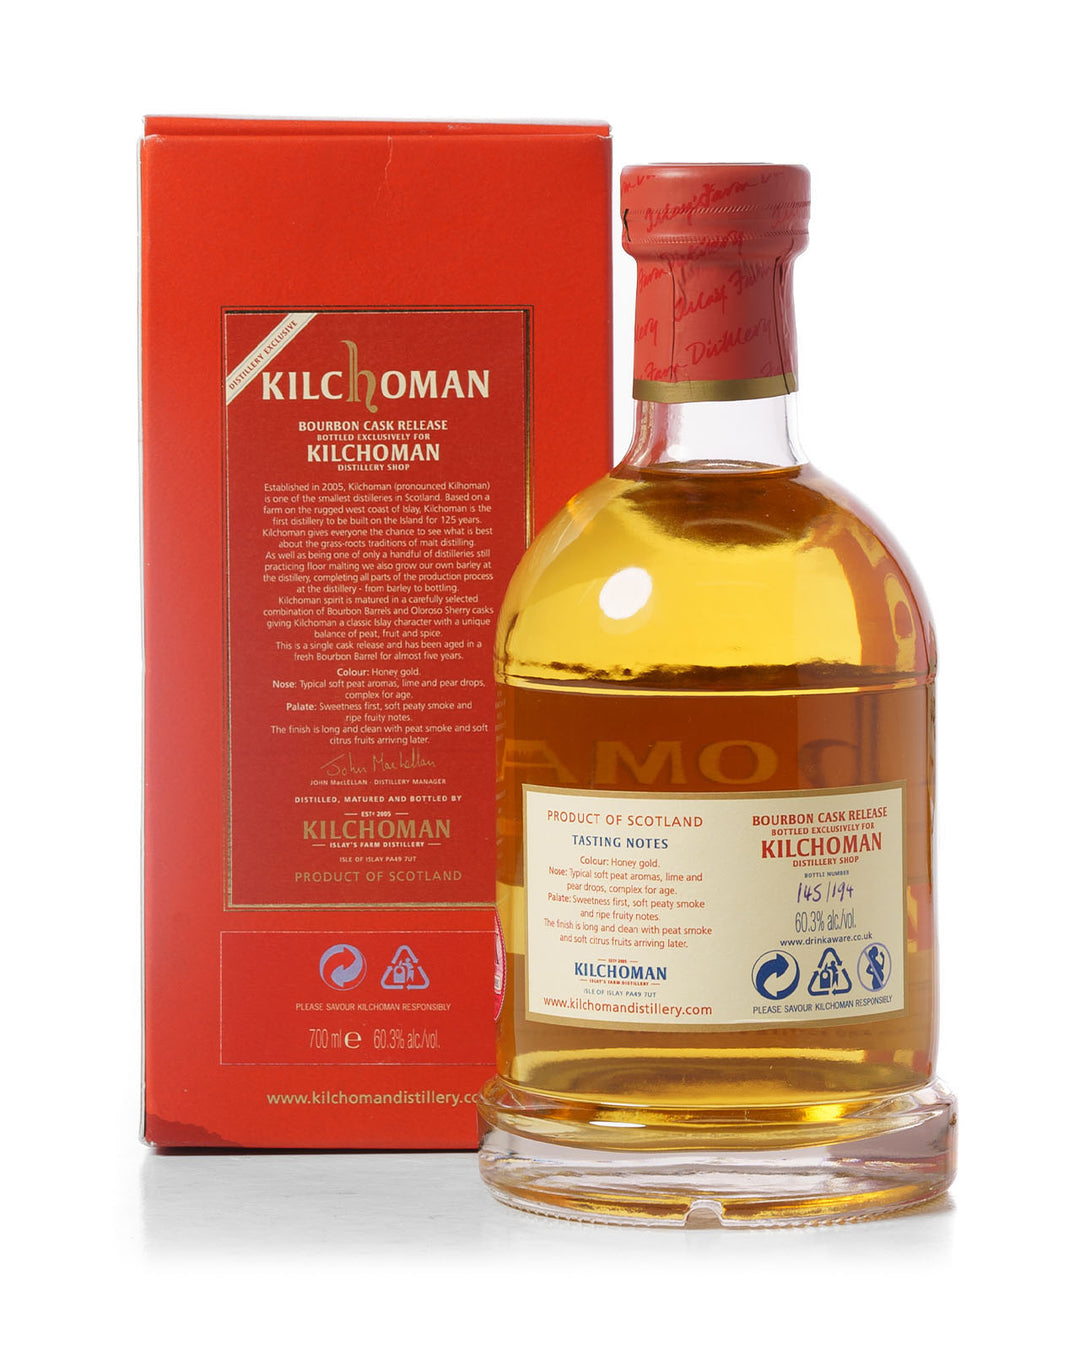 Kilchoman 2008 4 Year Old Bottled 2013 With Original Box